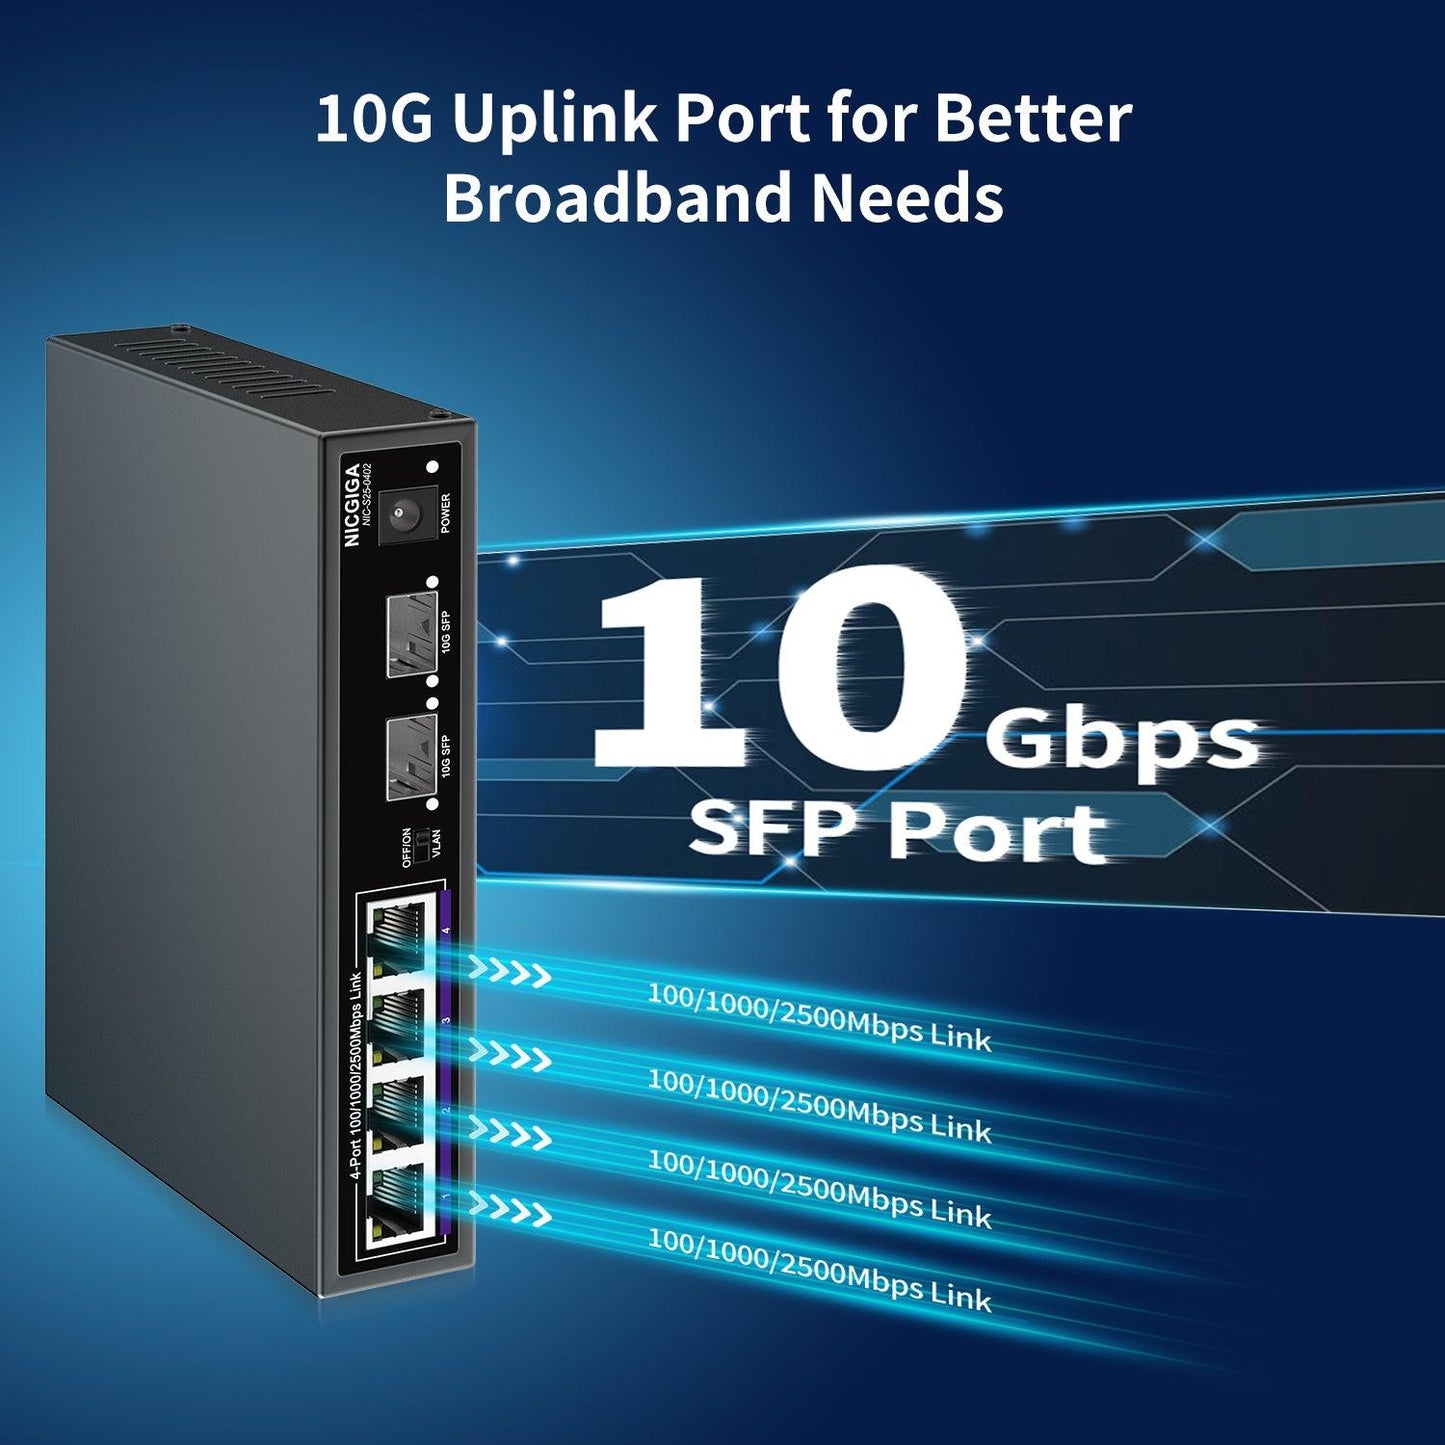 8 Port 2.5G Ethernet Switch with 10G SFP Uplink, NICGIGA Unmanaged 2.5Gb  Network Switch, Plug & Play, Desktop/Wall-Mount, Fanless Metal Design.